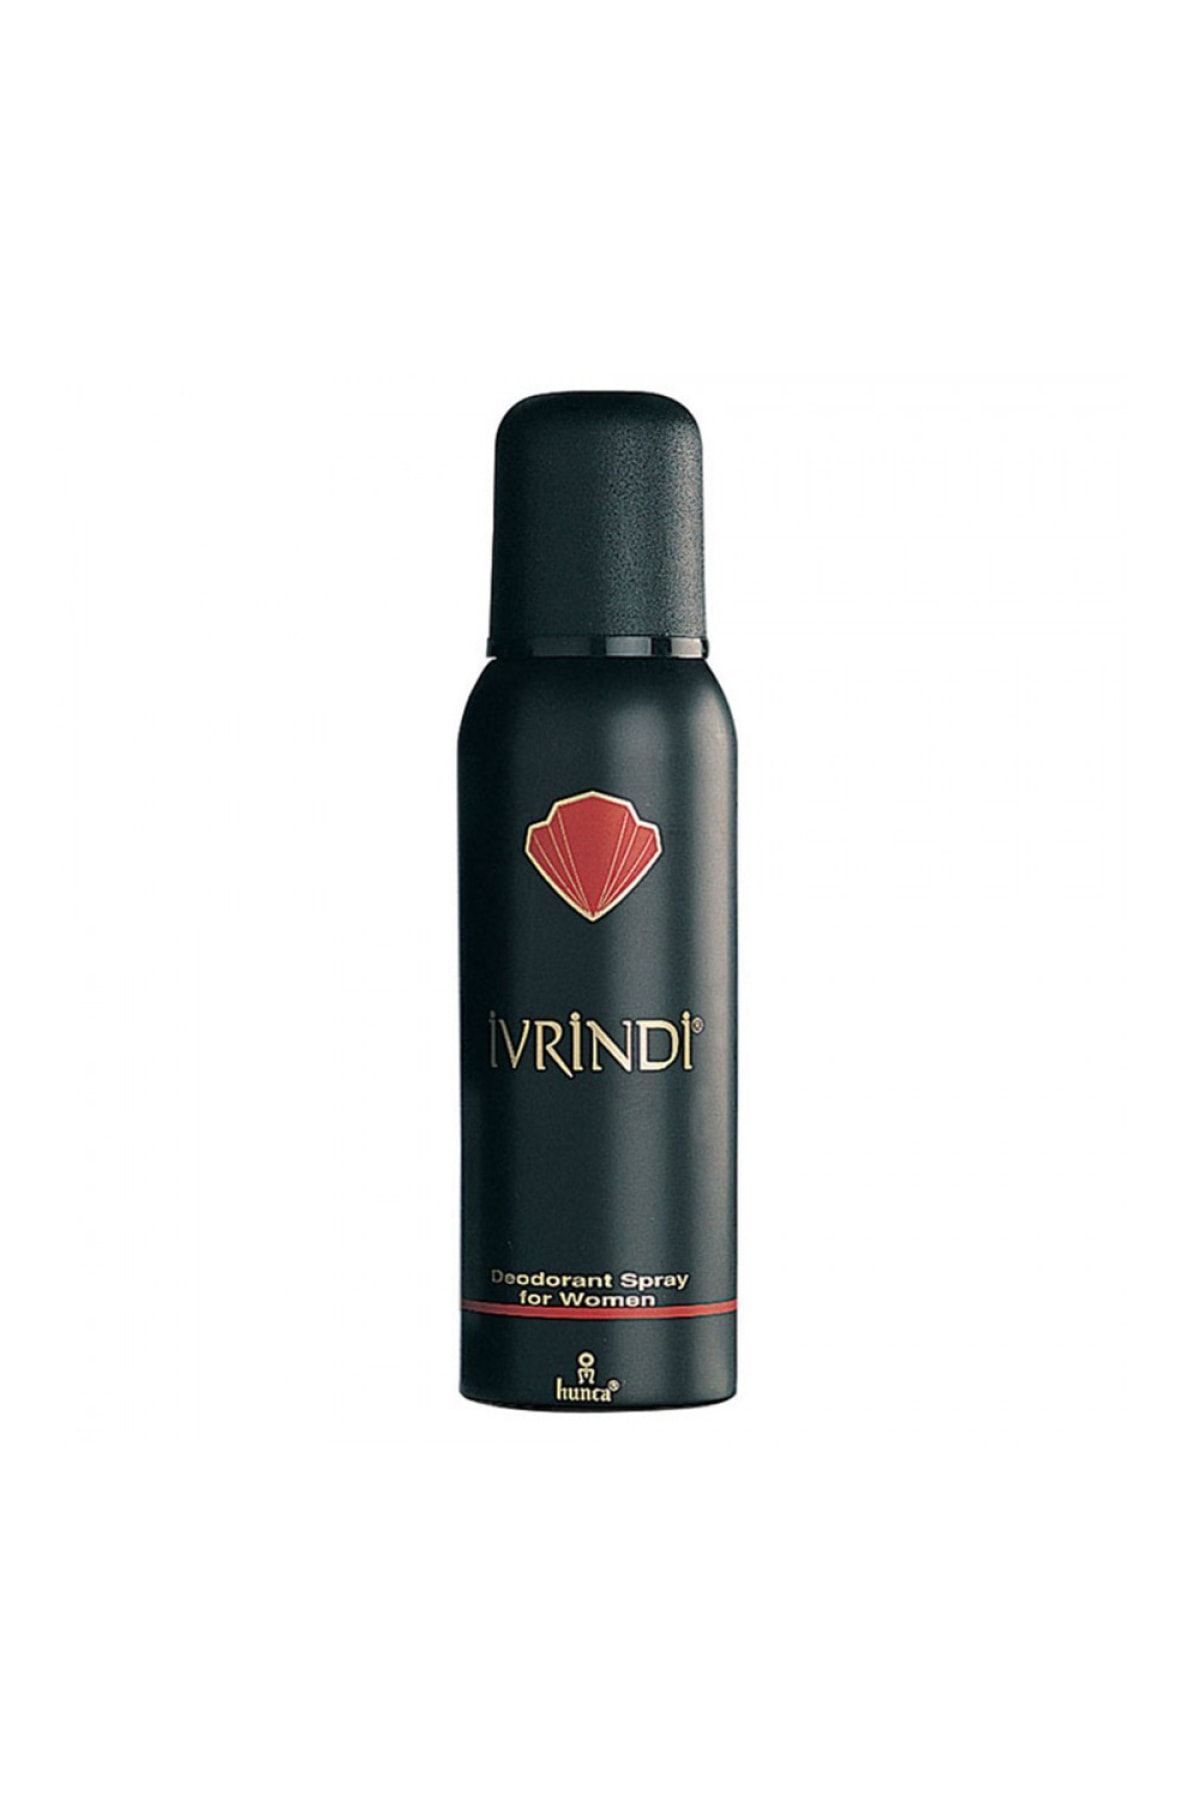 Ivrindi Findit Deodorant 150 Ml